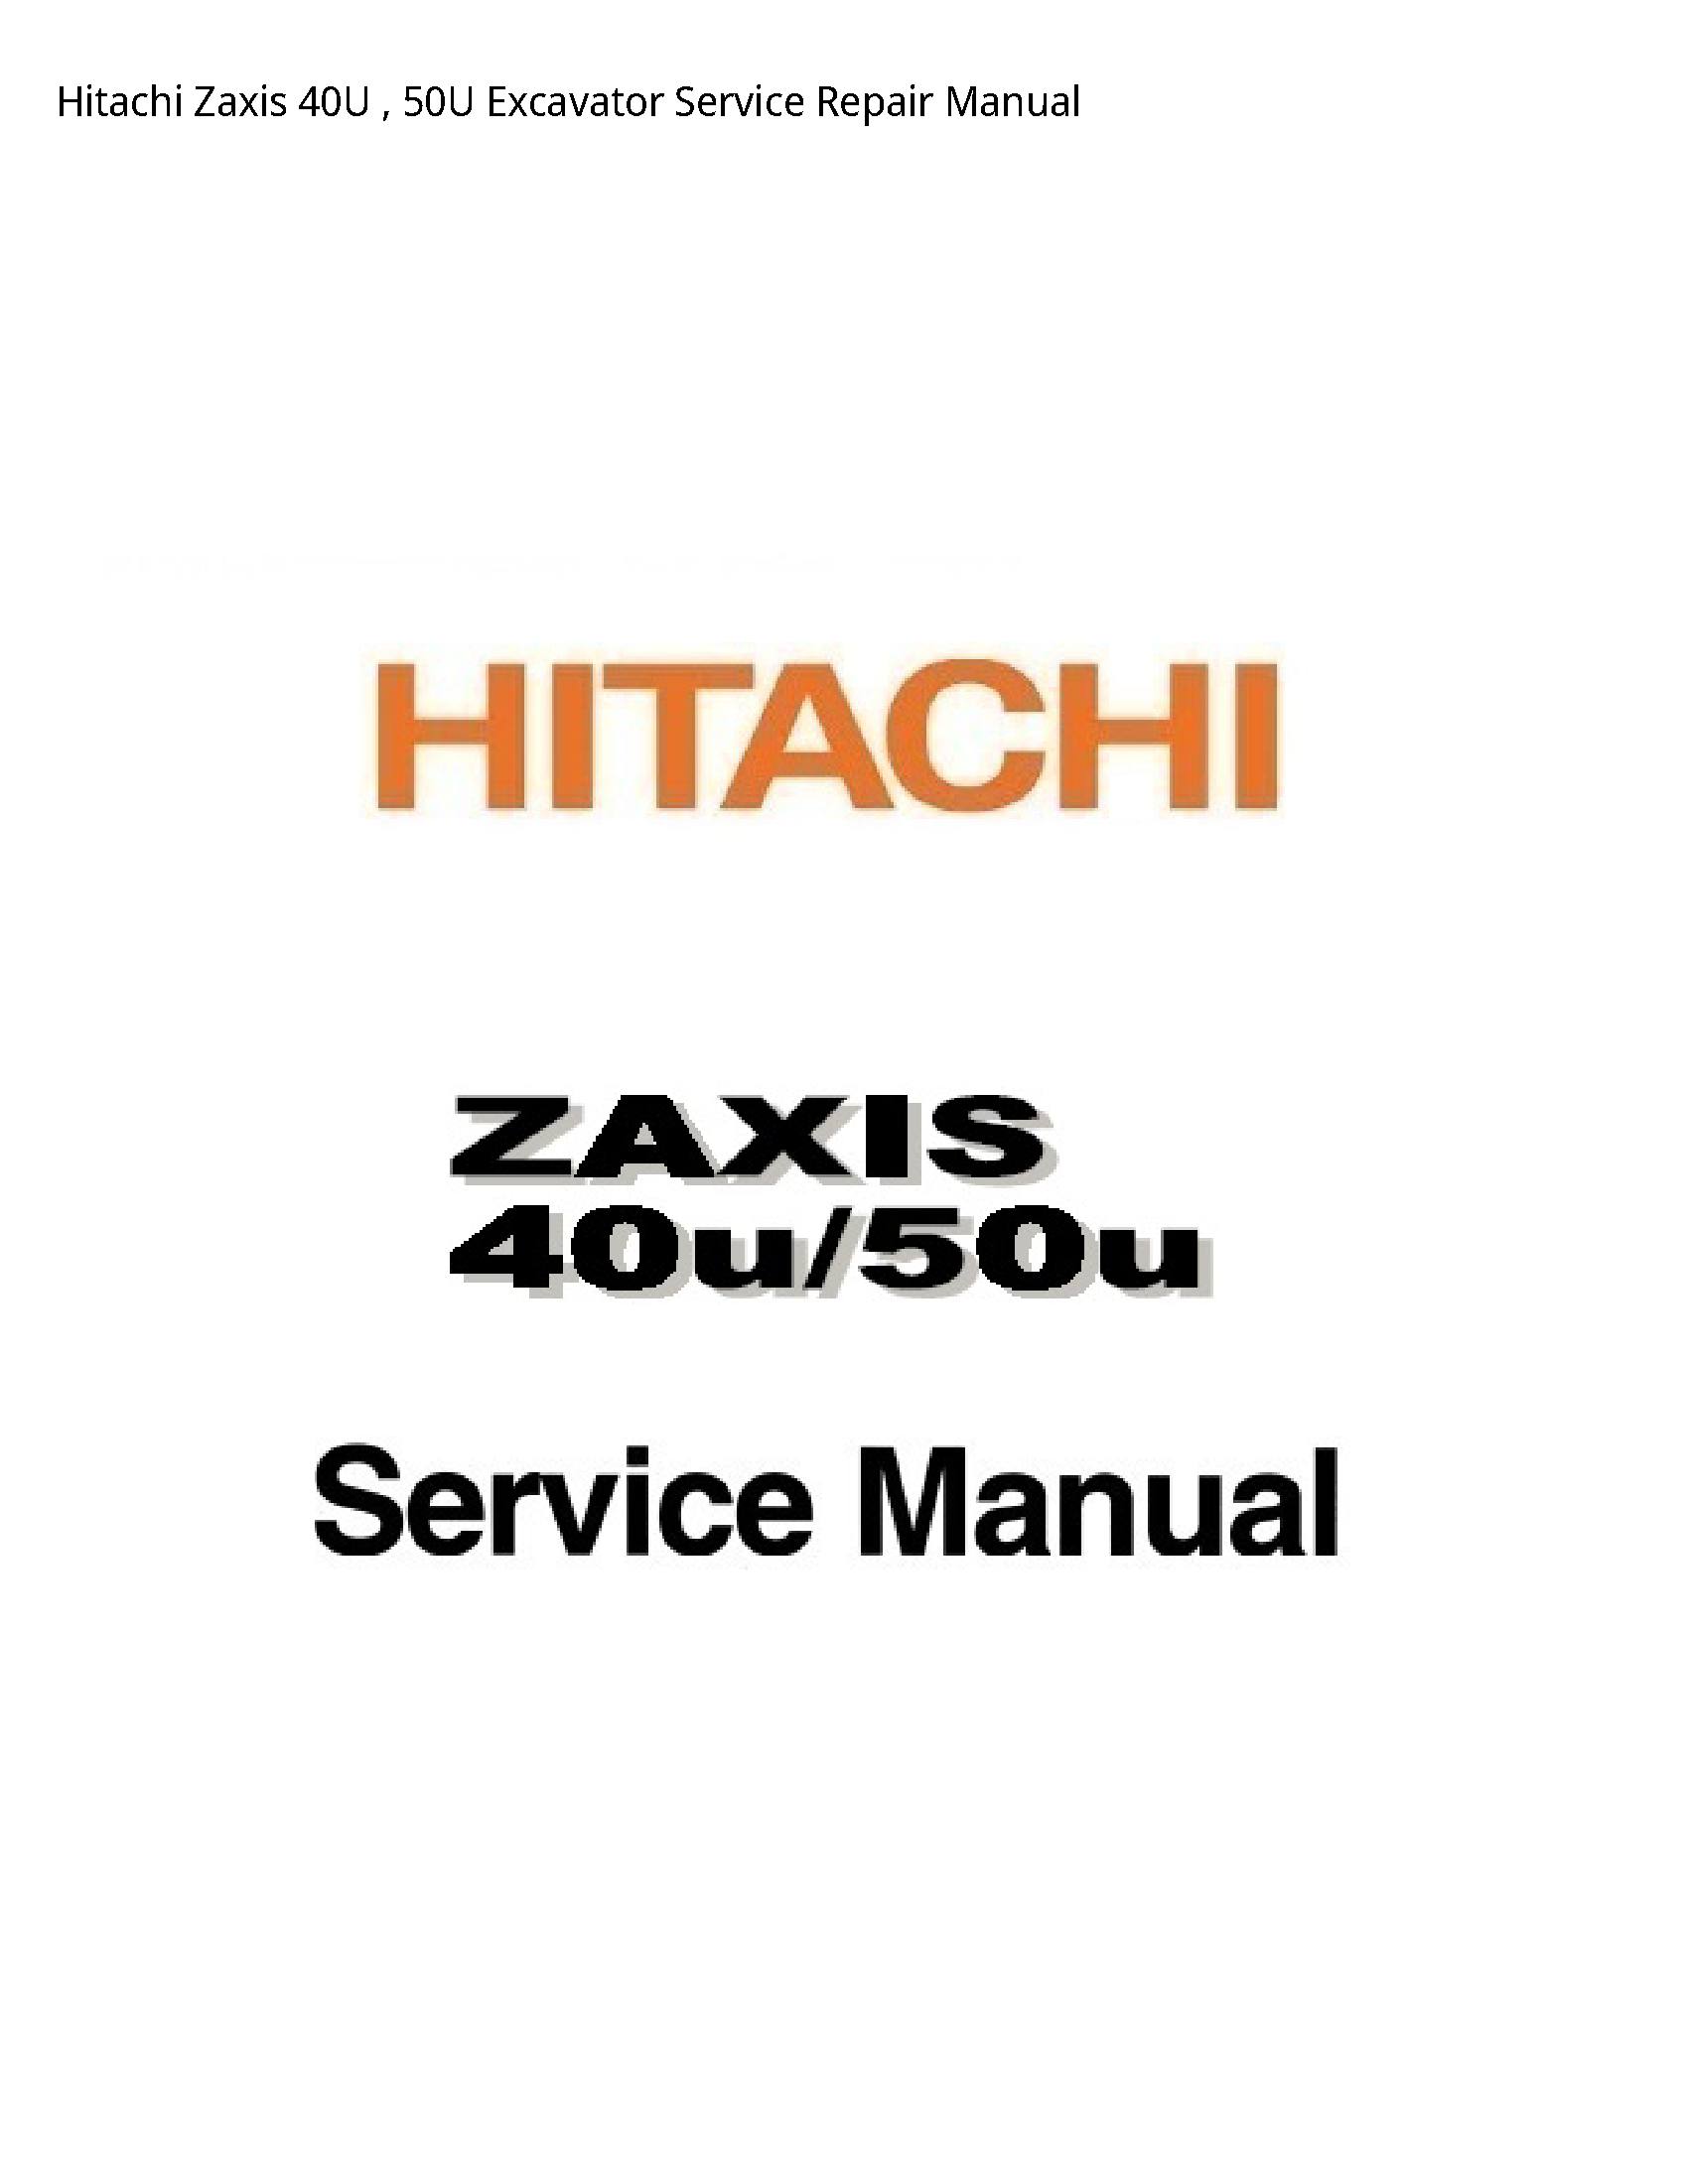 Hitachi 40U Zaxis Excavator manual